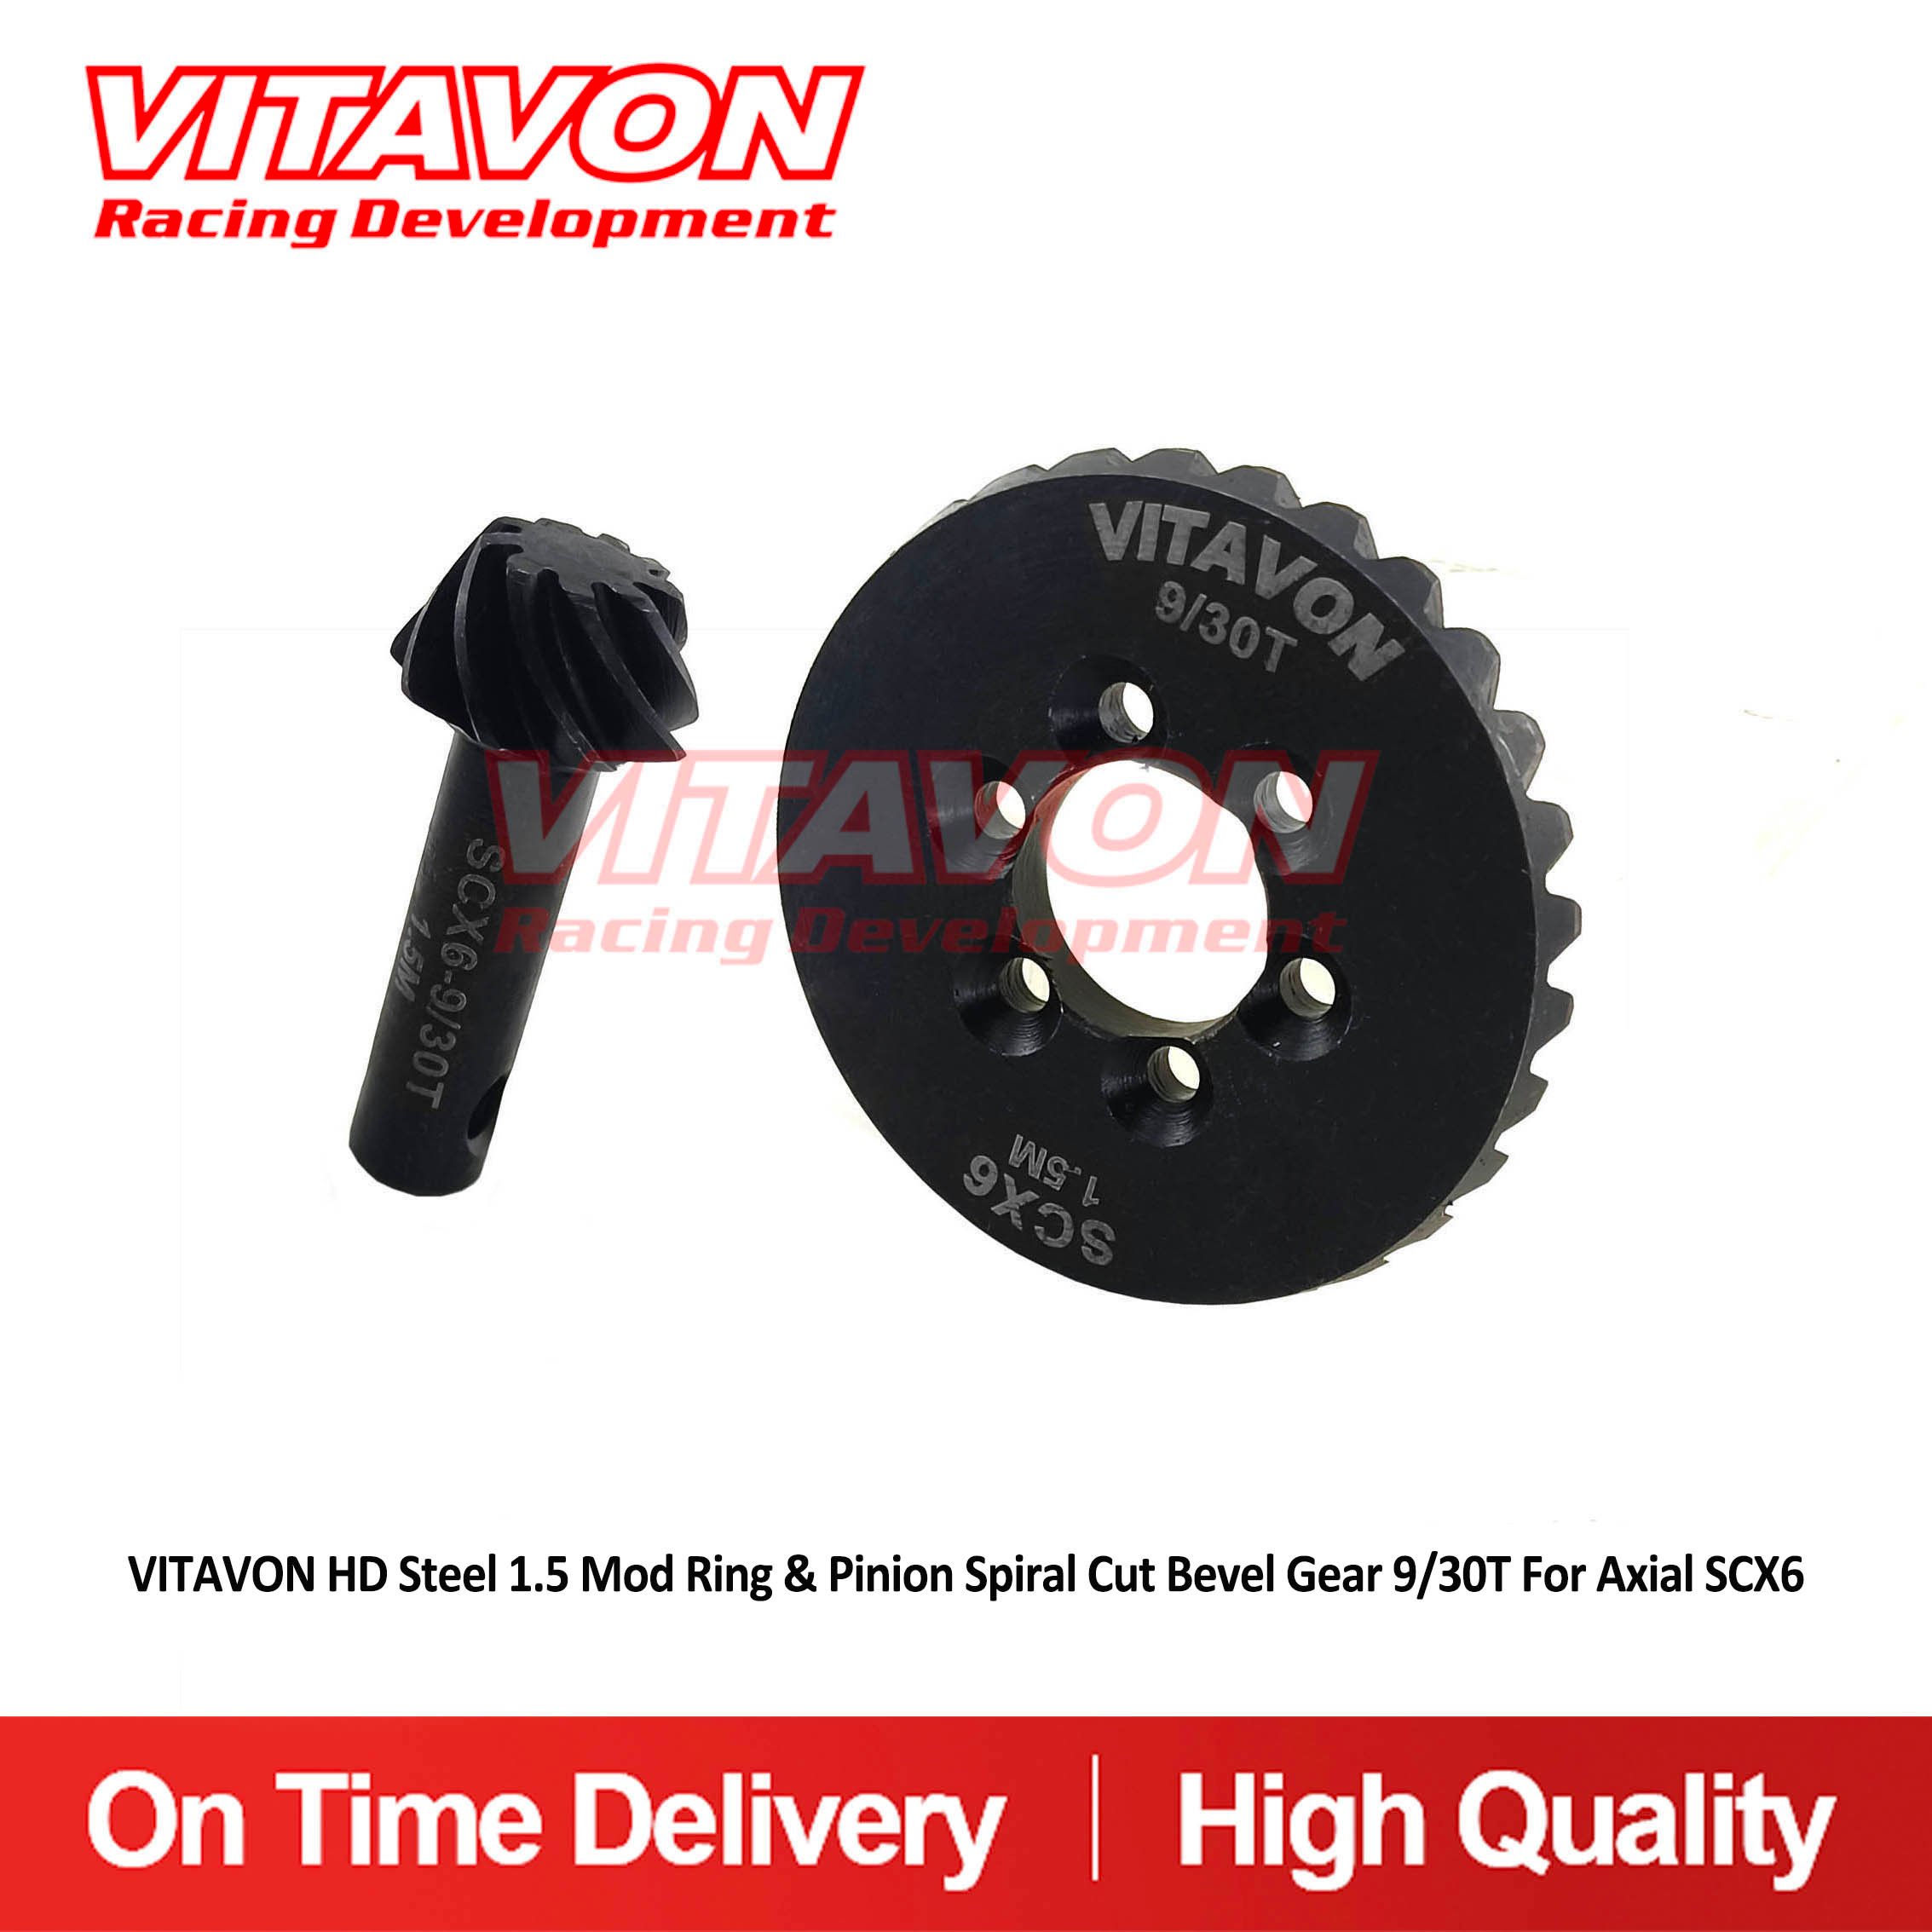 VITAVON HD Steel 1.5 Mod Ring & Pinion Spiral Cut Bevel Gear 9/30T For Axial SCX6